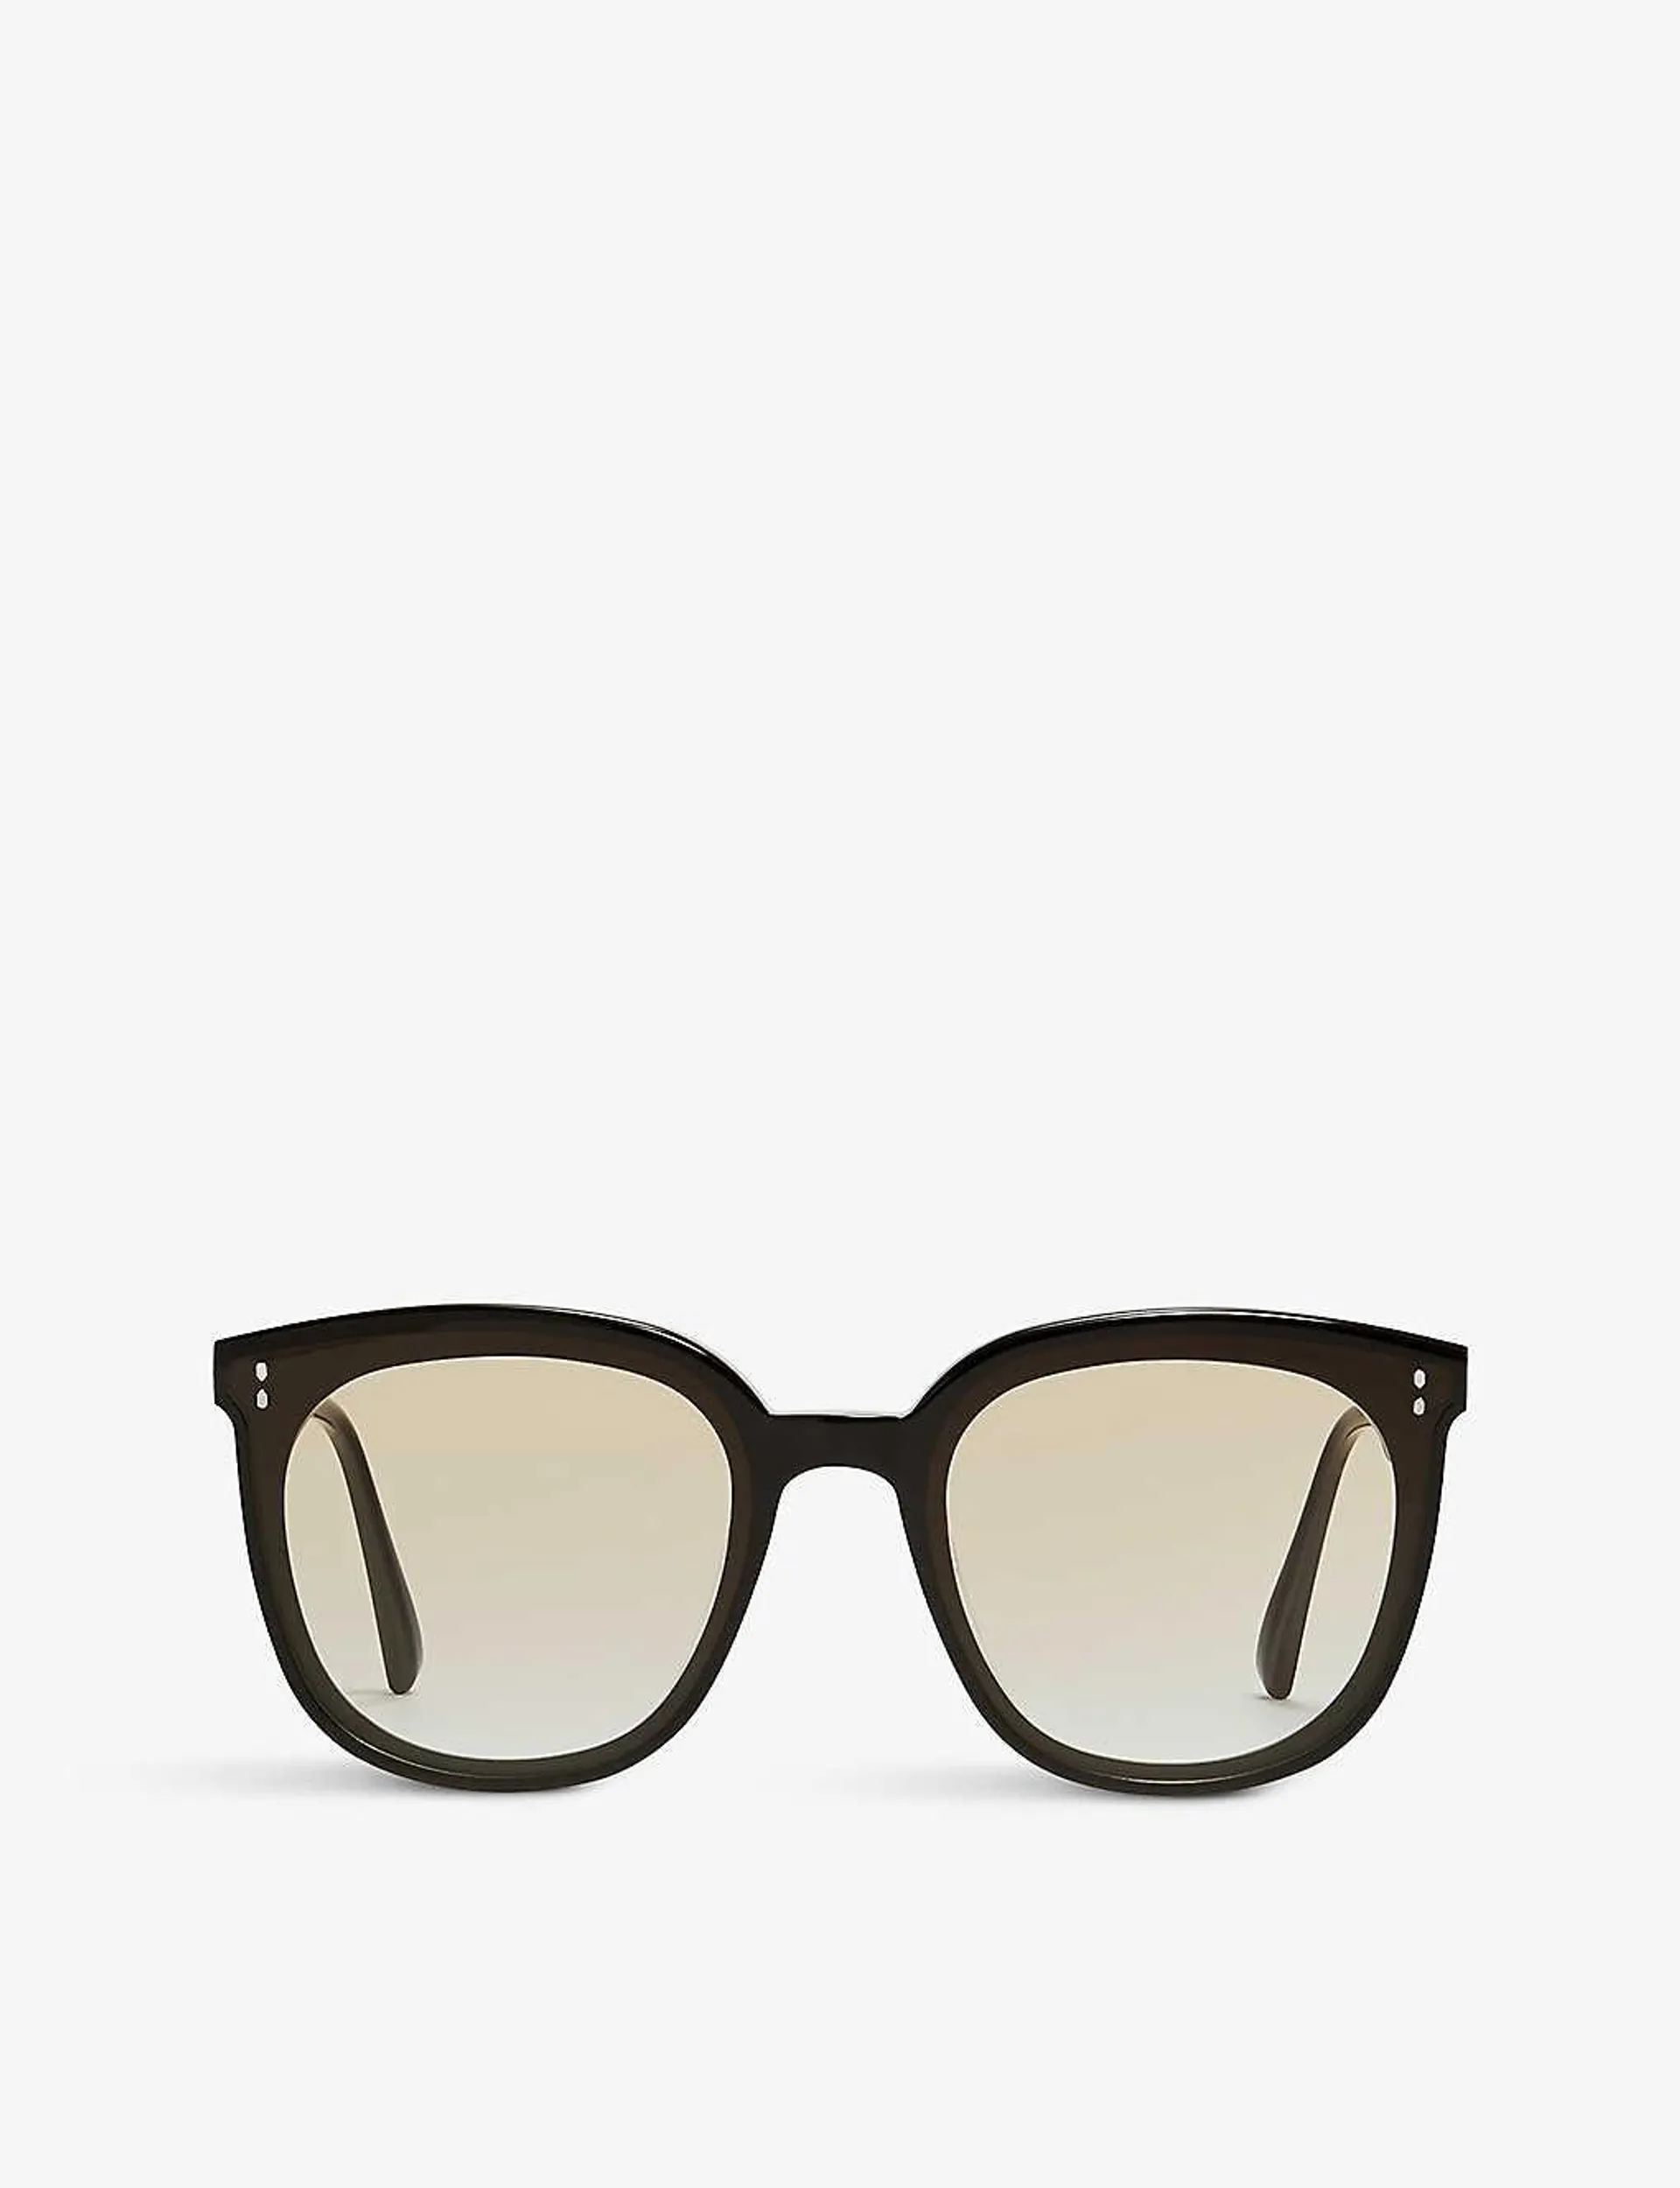 ROSY-01(BRG) square-frame acetate sunglasses